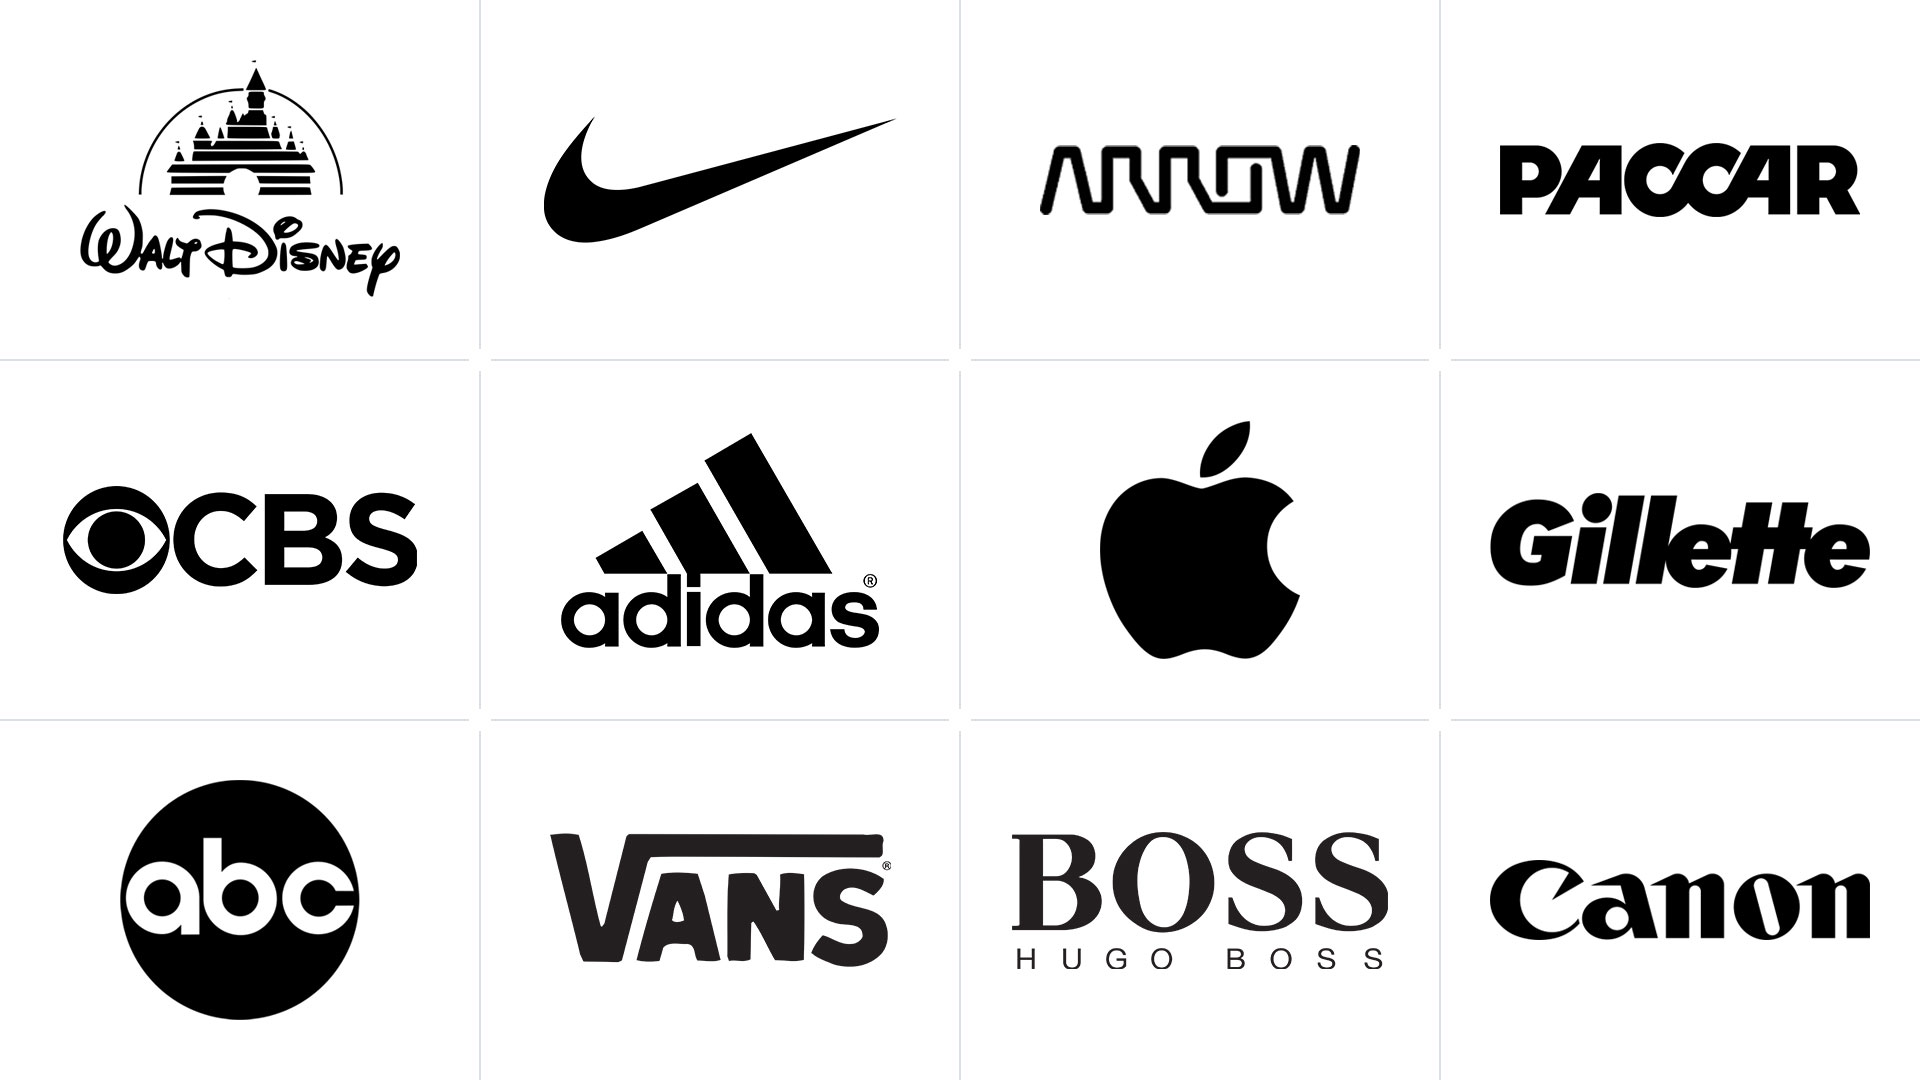 Black Color Usage Examples in Popular Logos